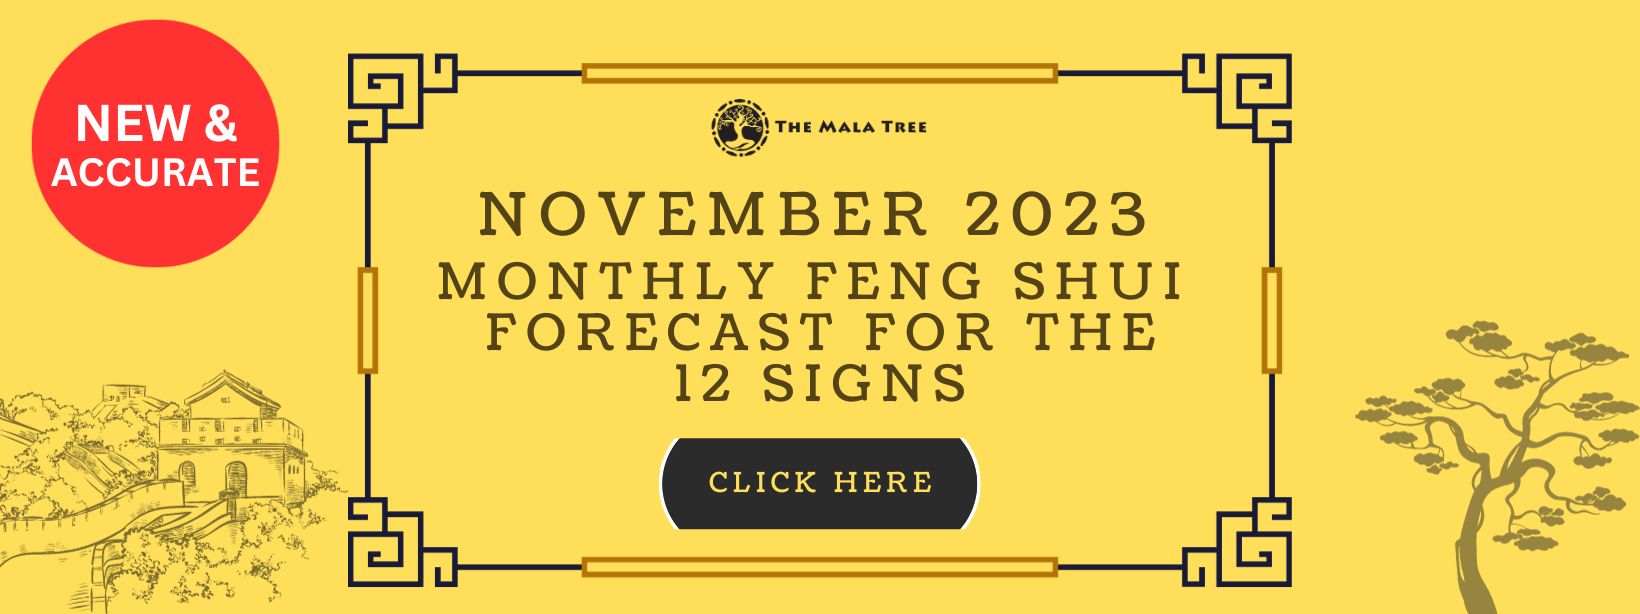 November 2023 Monthly Feng Shui Forecast